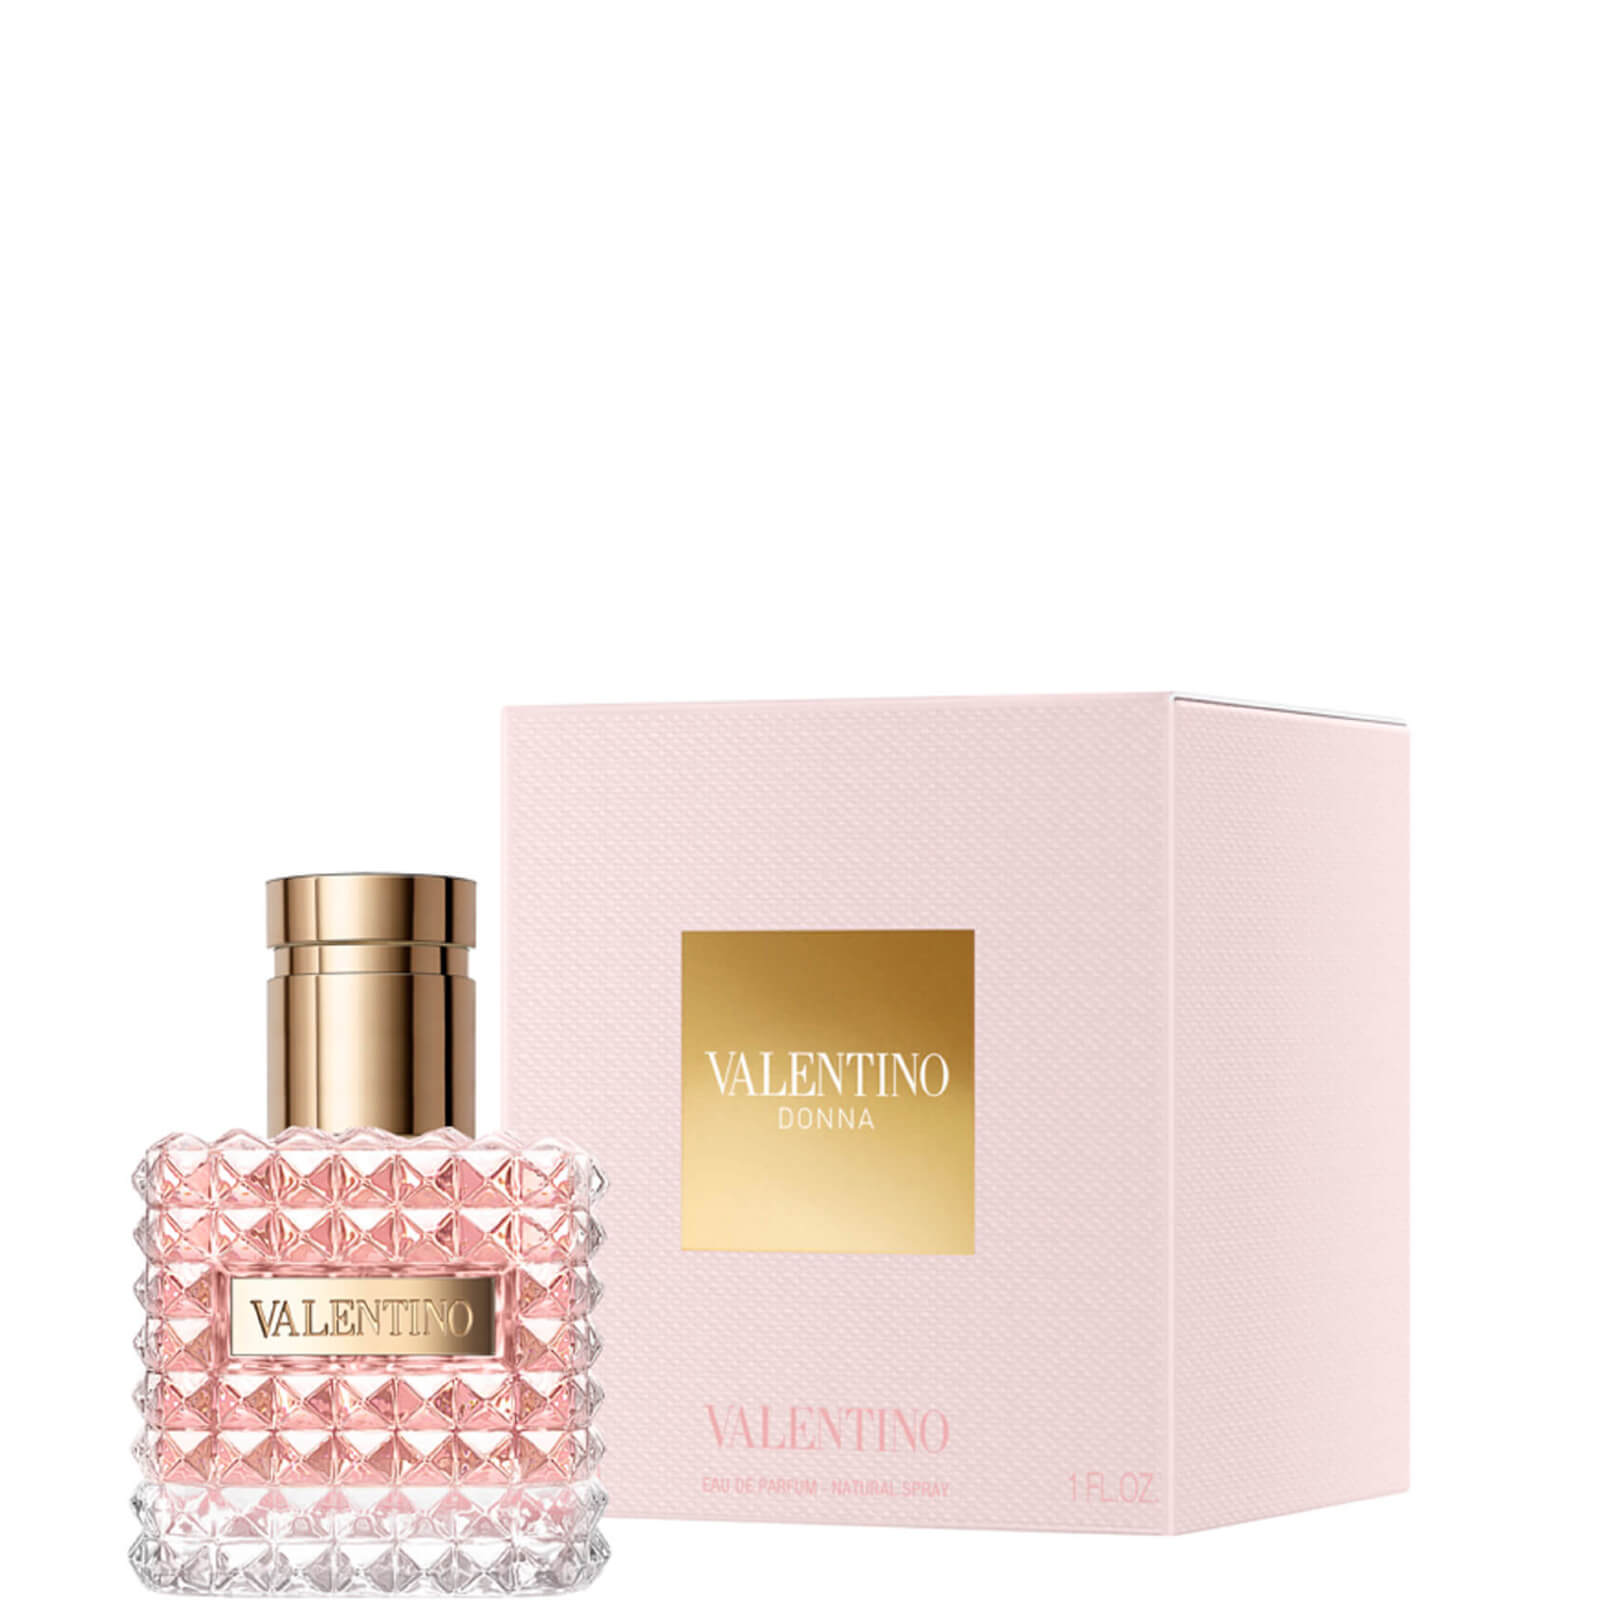 Valentino Donna Eau de Parfum – 30ml